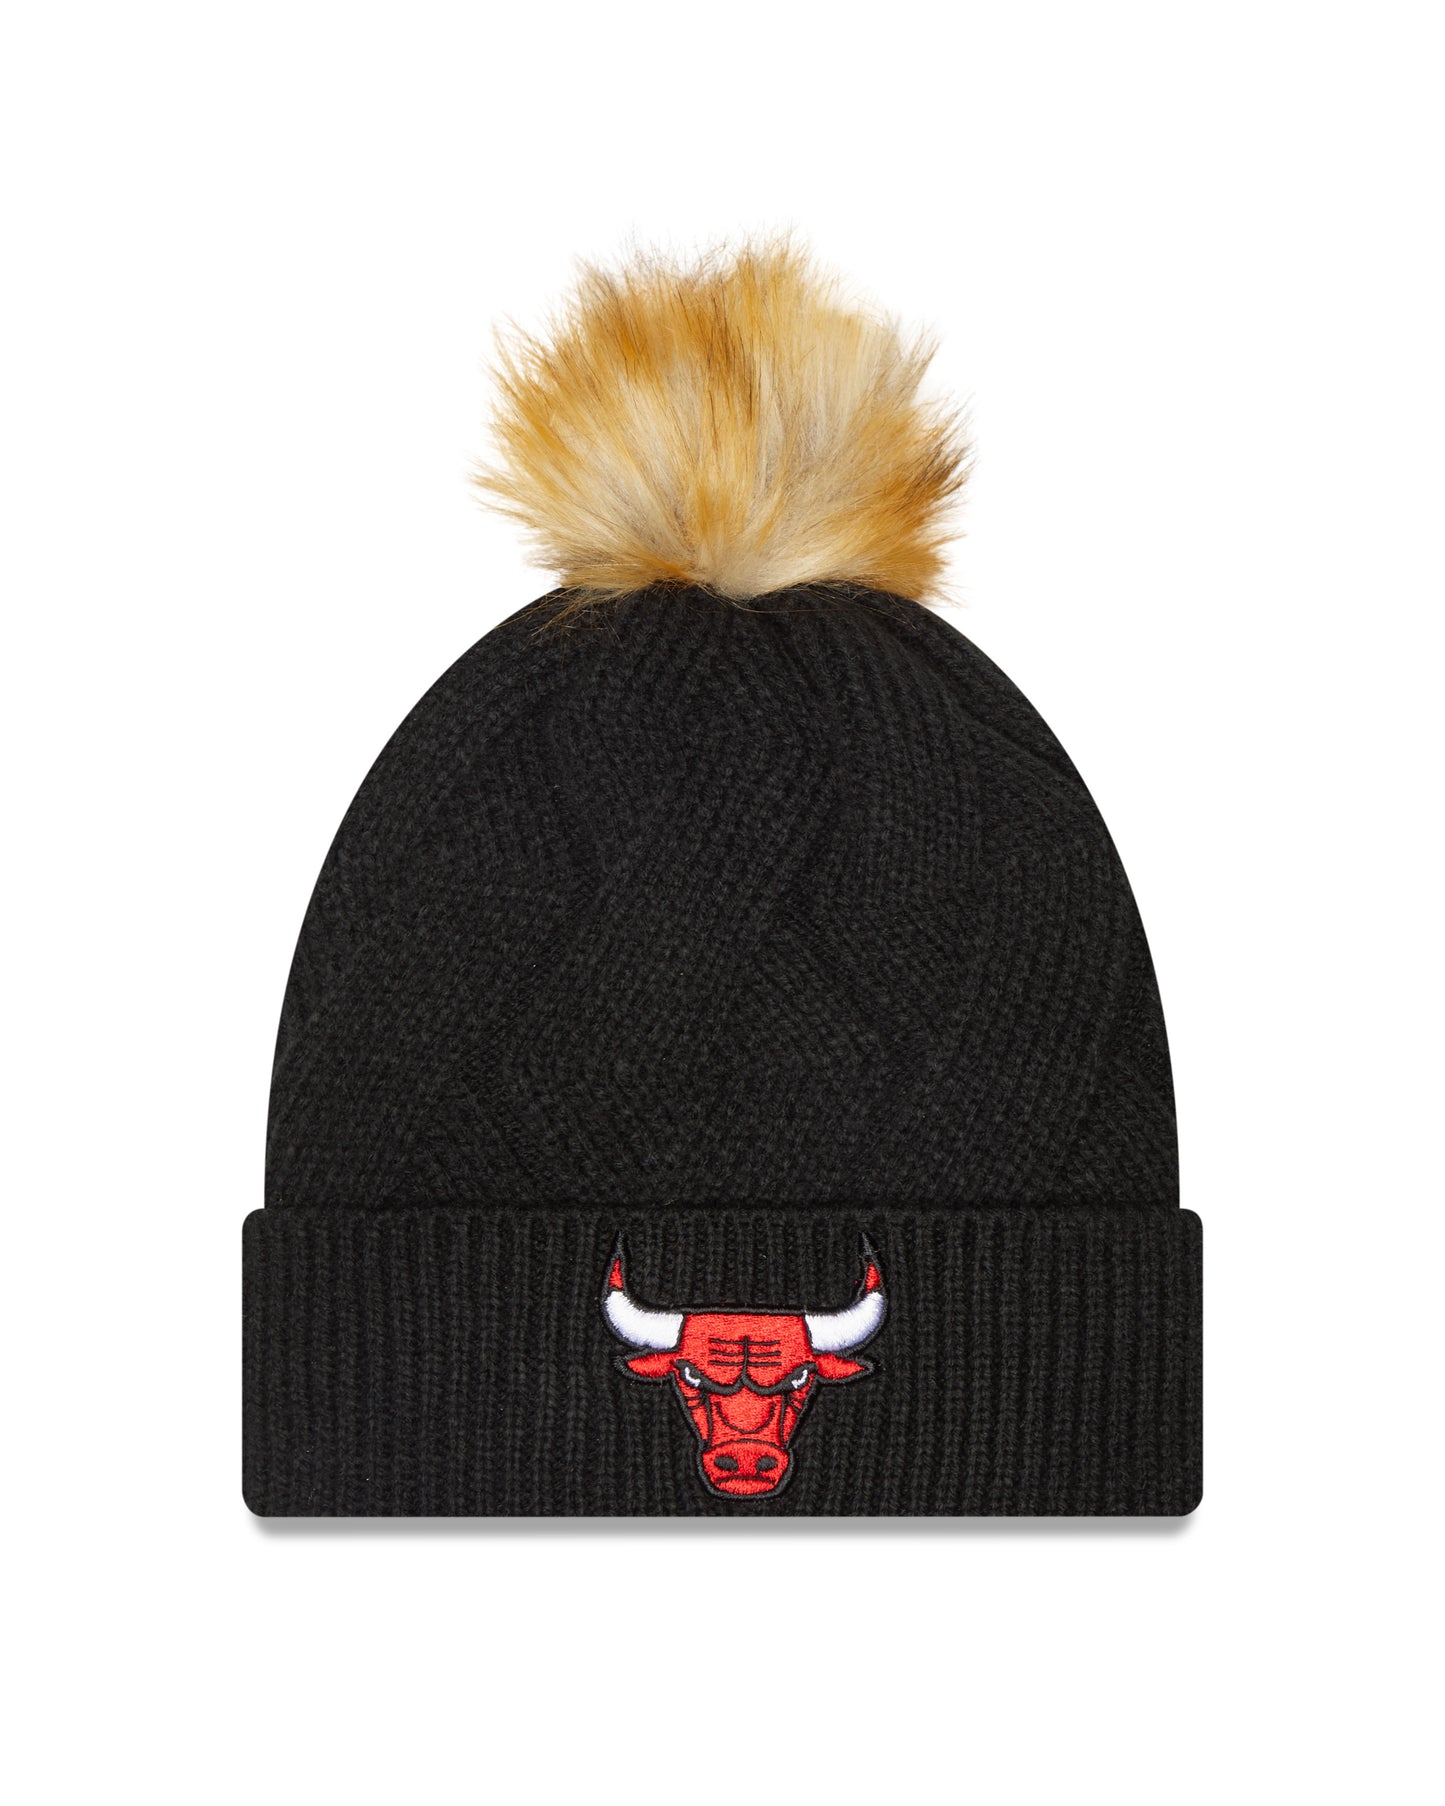 Women's Chicago Bulls New Era Black Snowy Cuffed Knit Hat with Pom